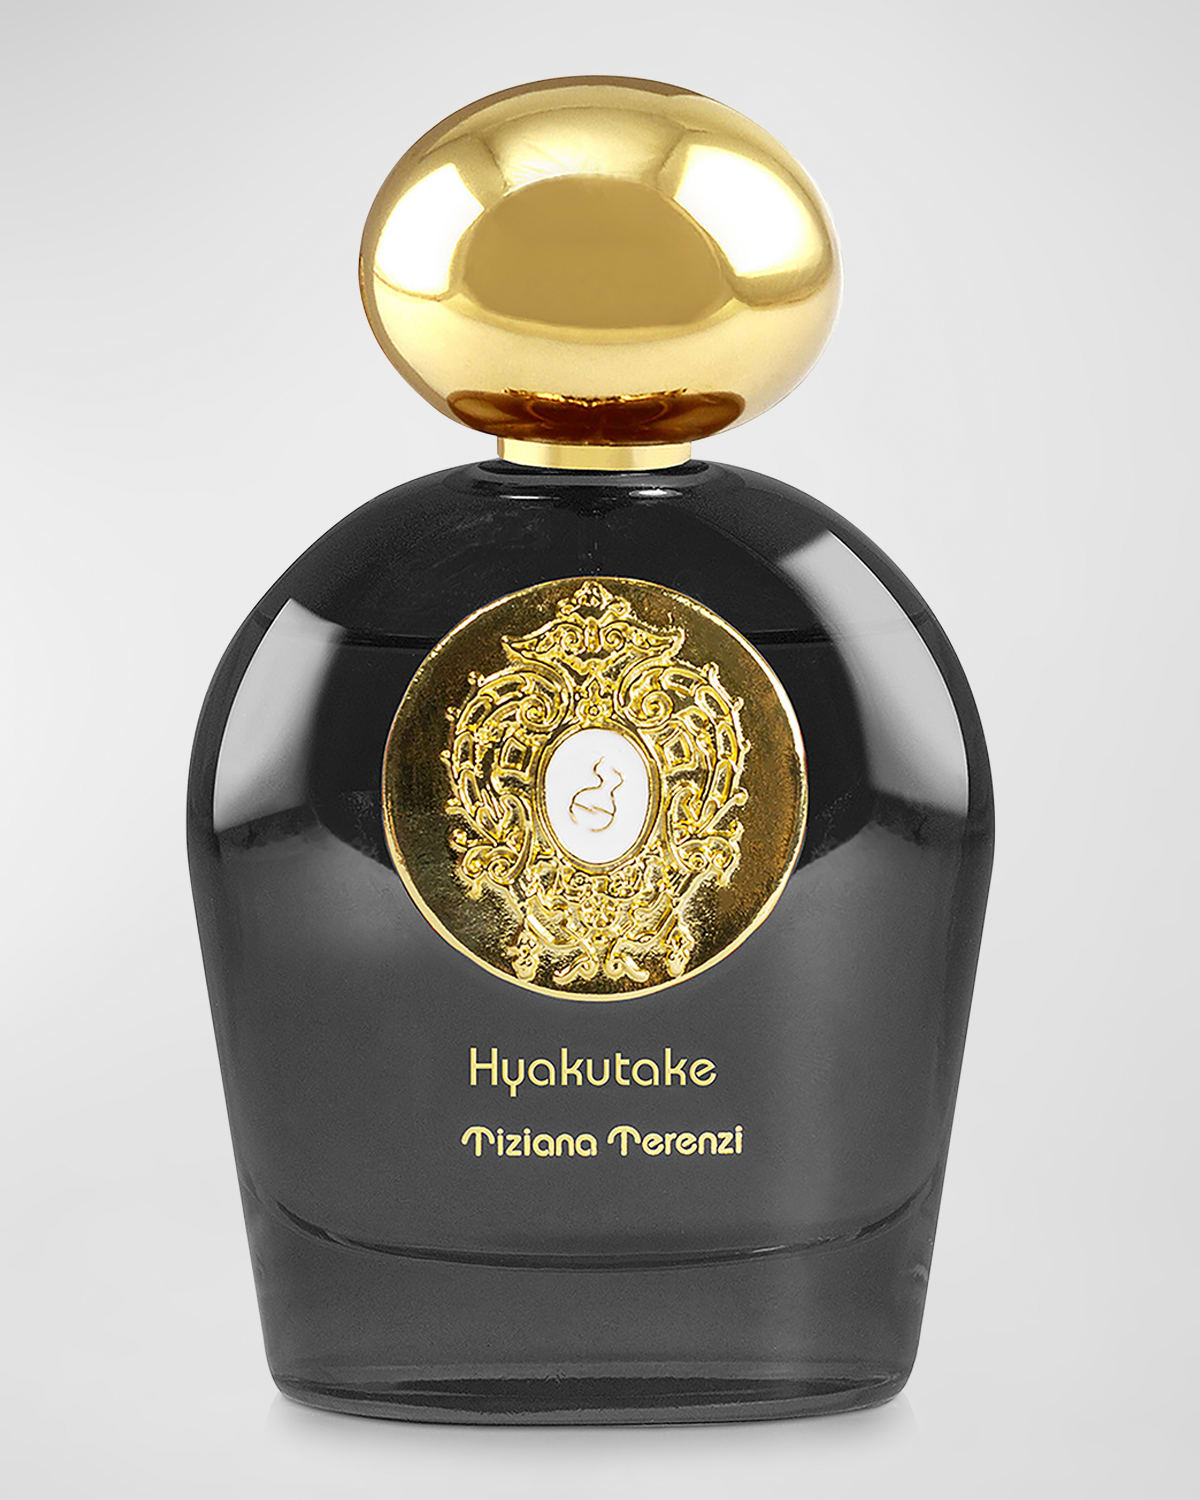 Hyakutake Extrait de Parfum, 3.4 oz.